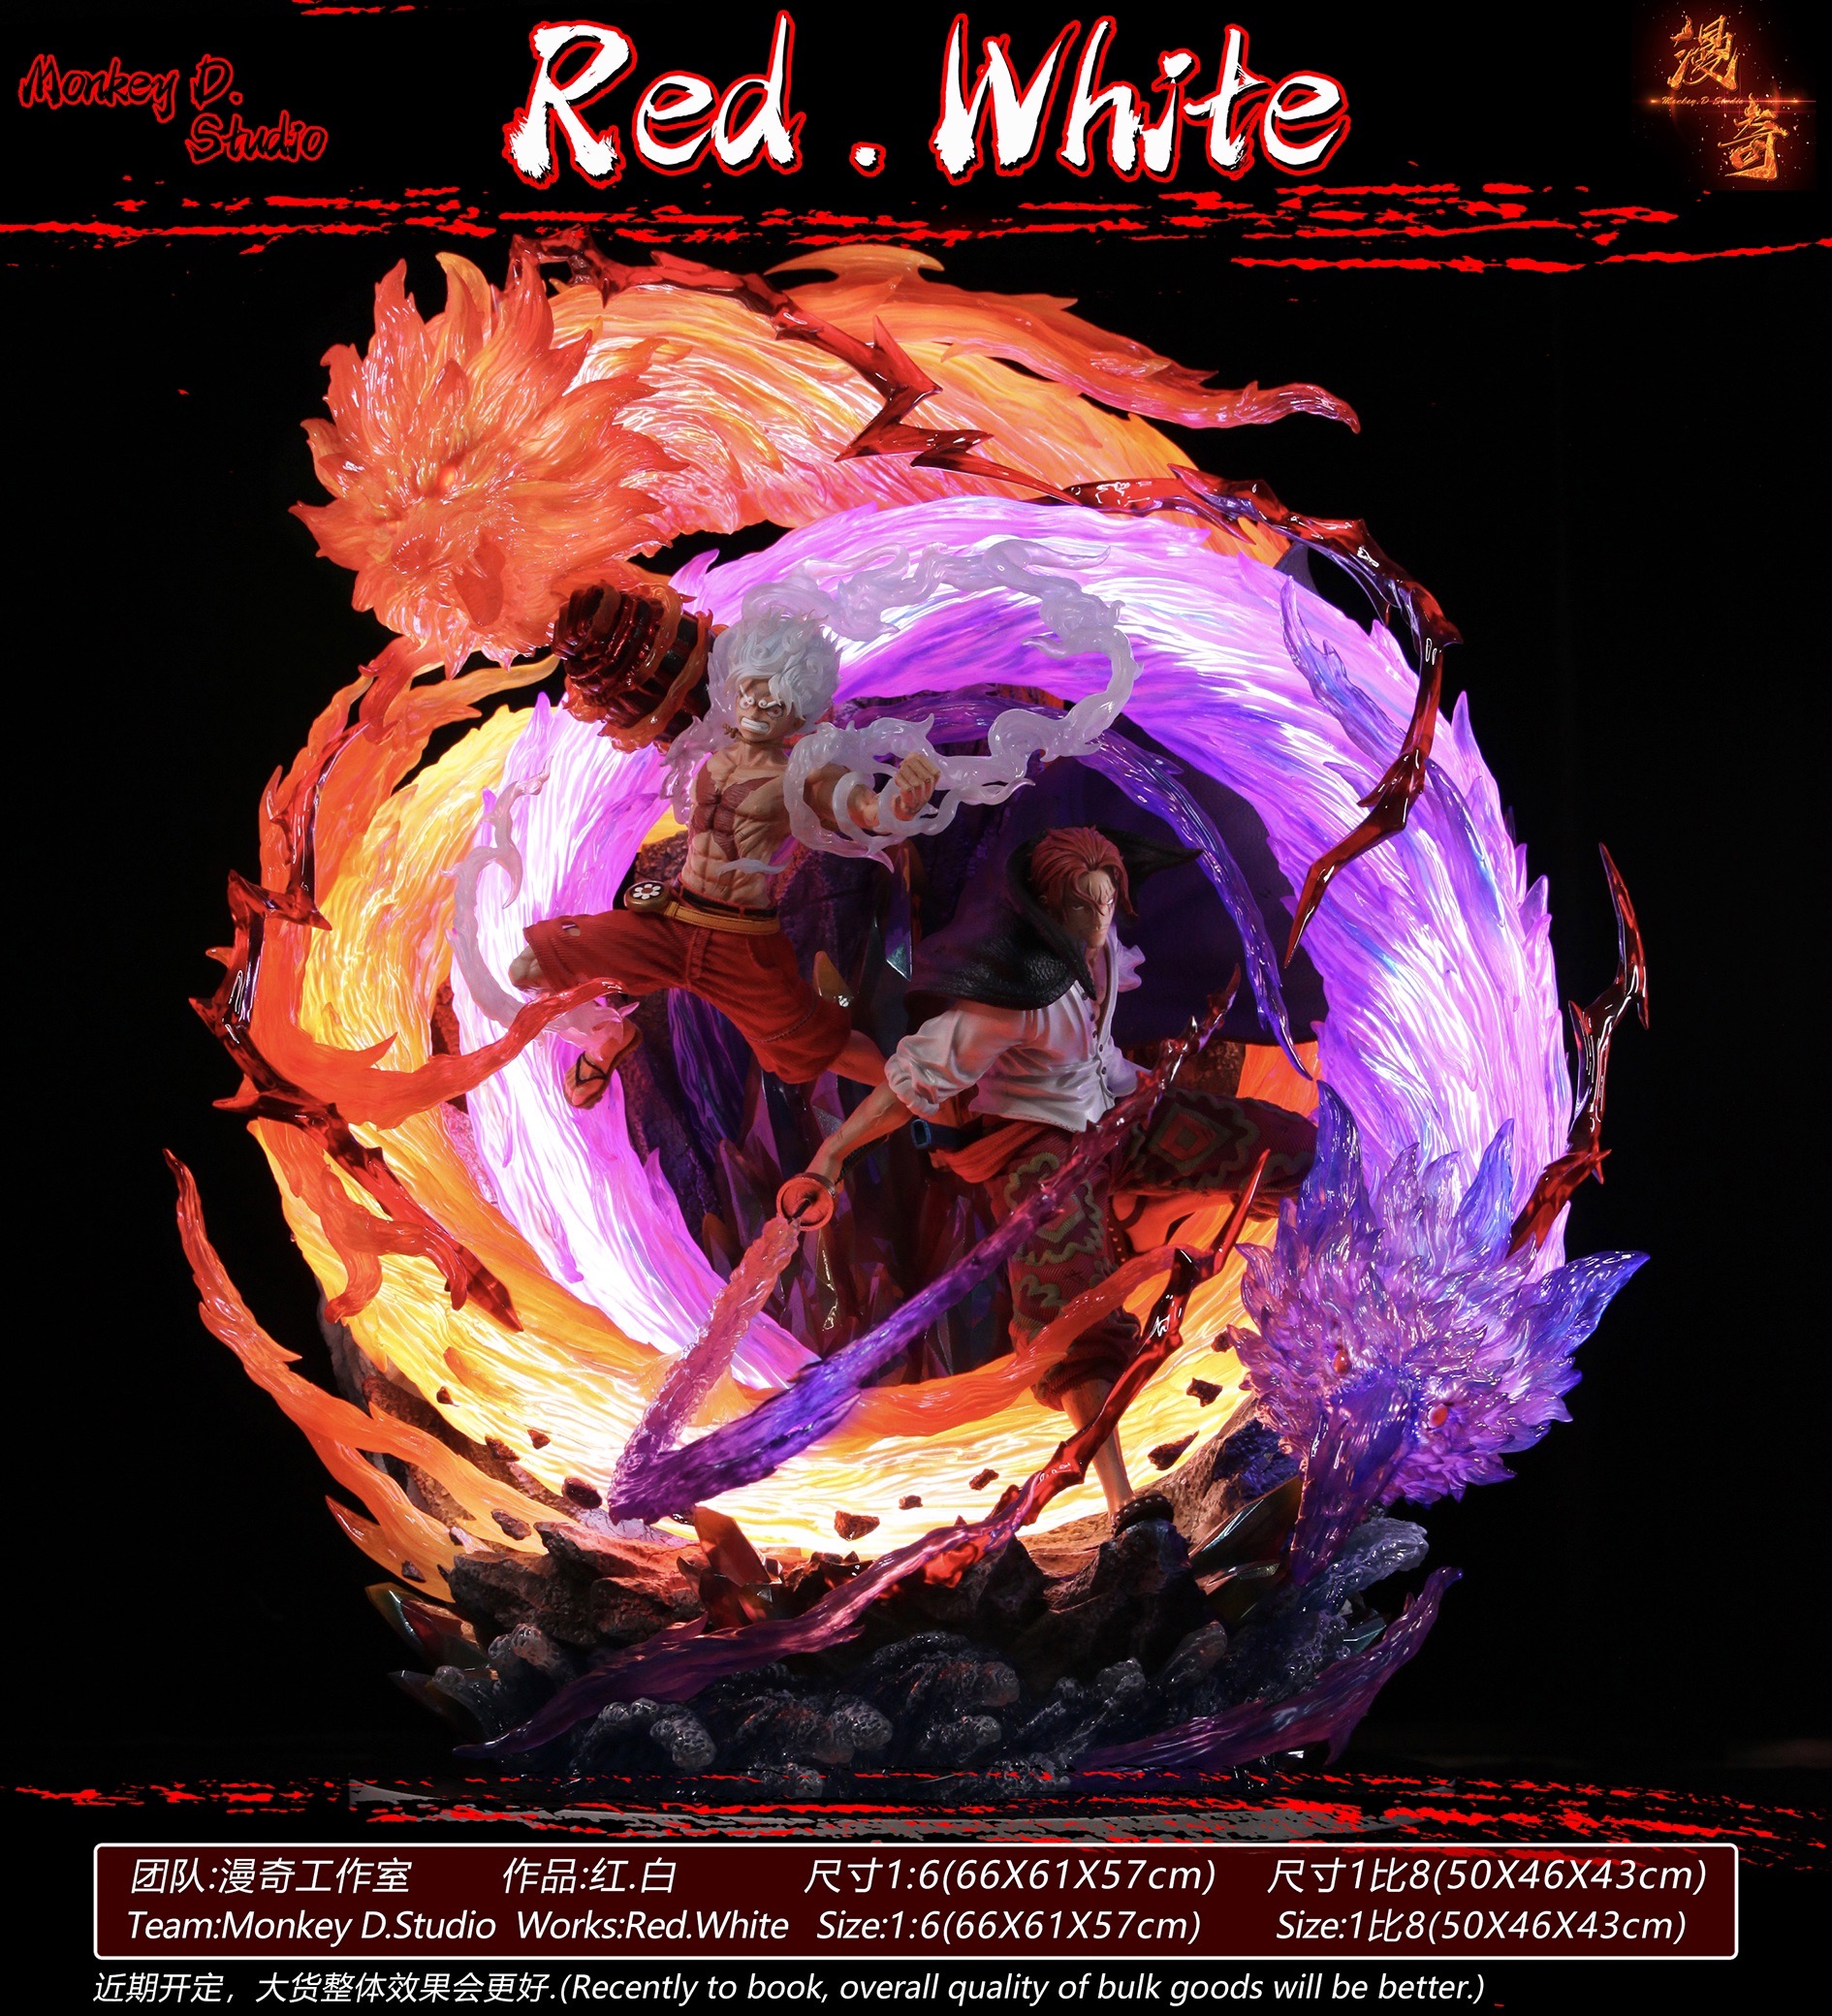 1/8 Red White ผมแดง นิกะ by Monkey D. Studio (มัดจำ) [[SOLD OUT]]